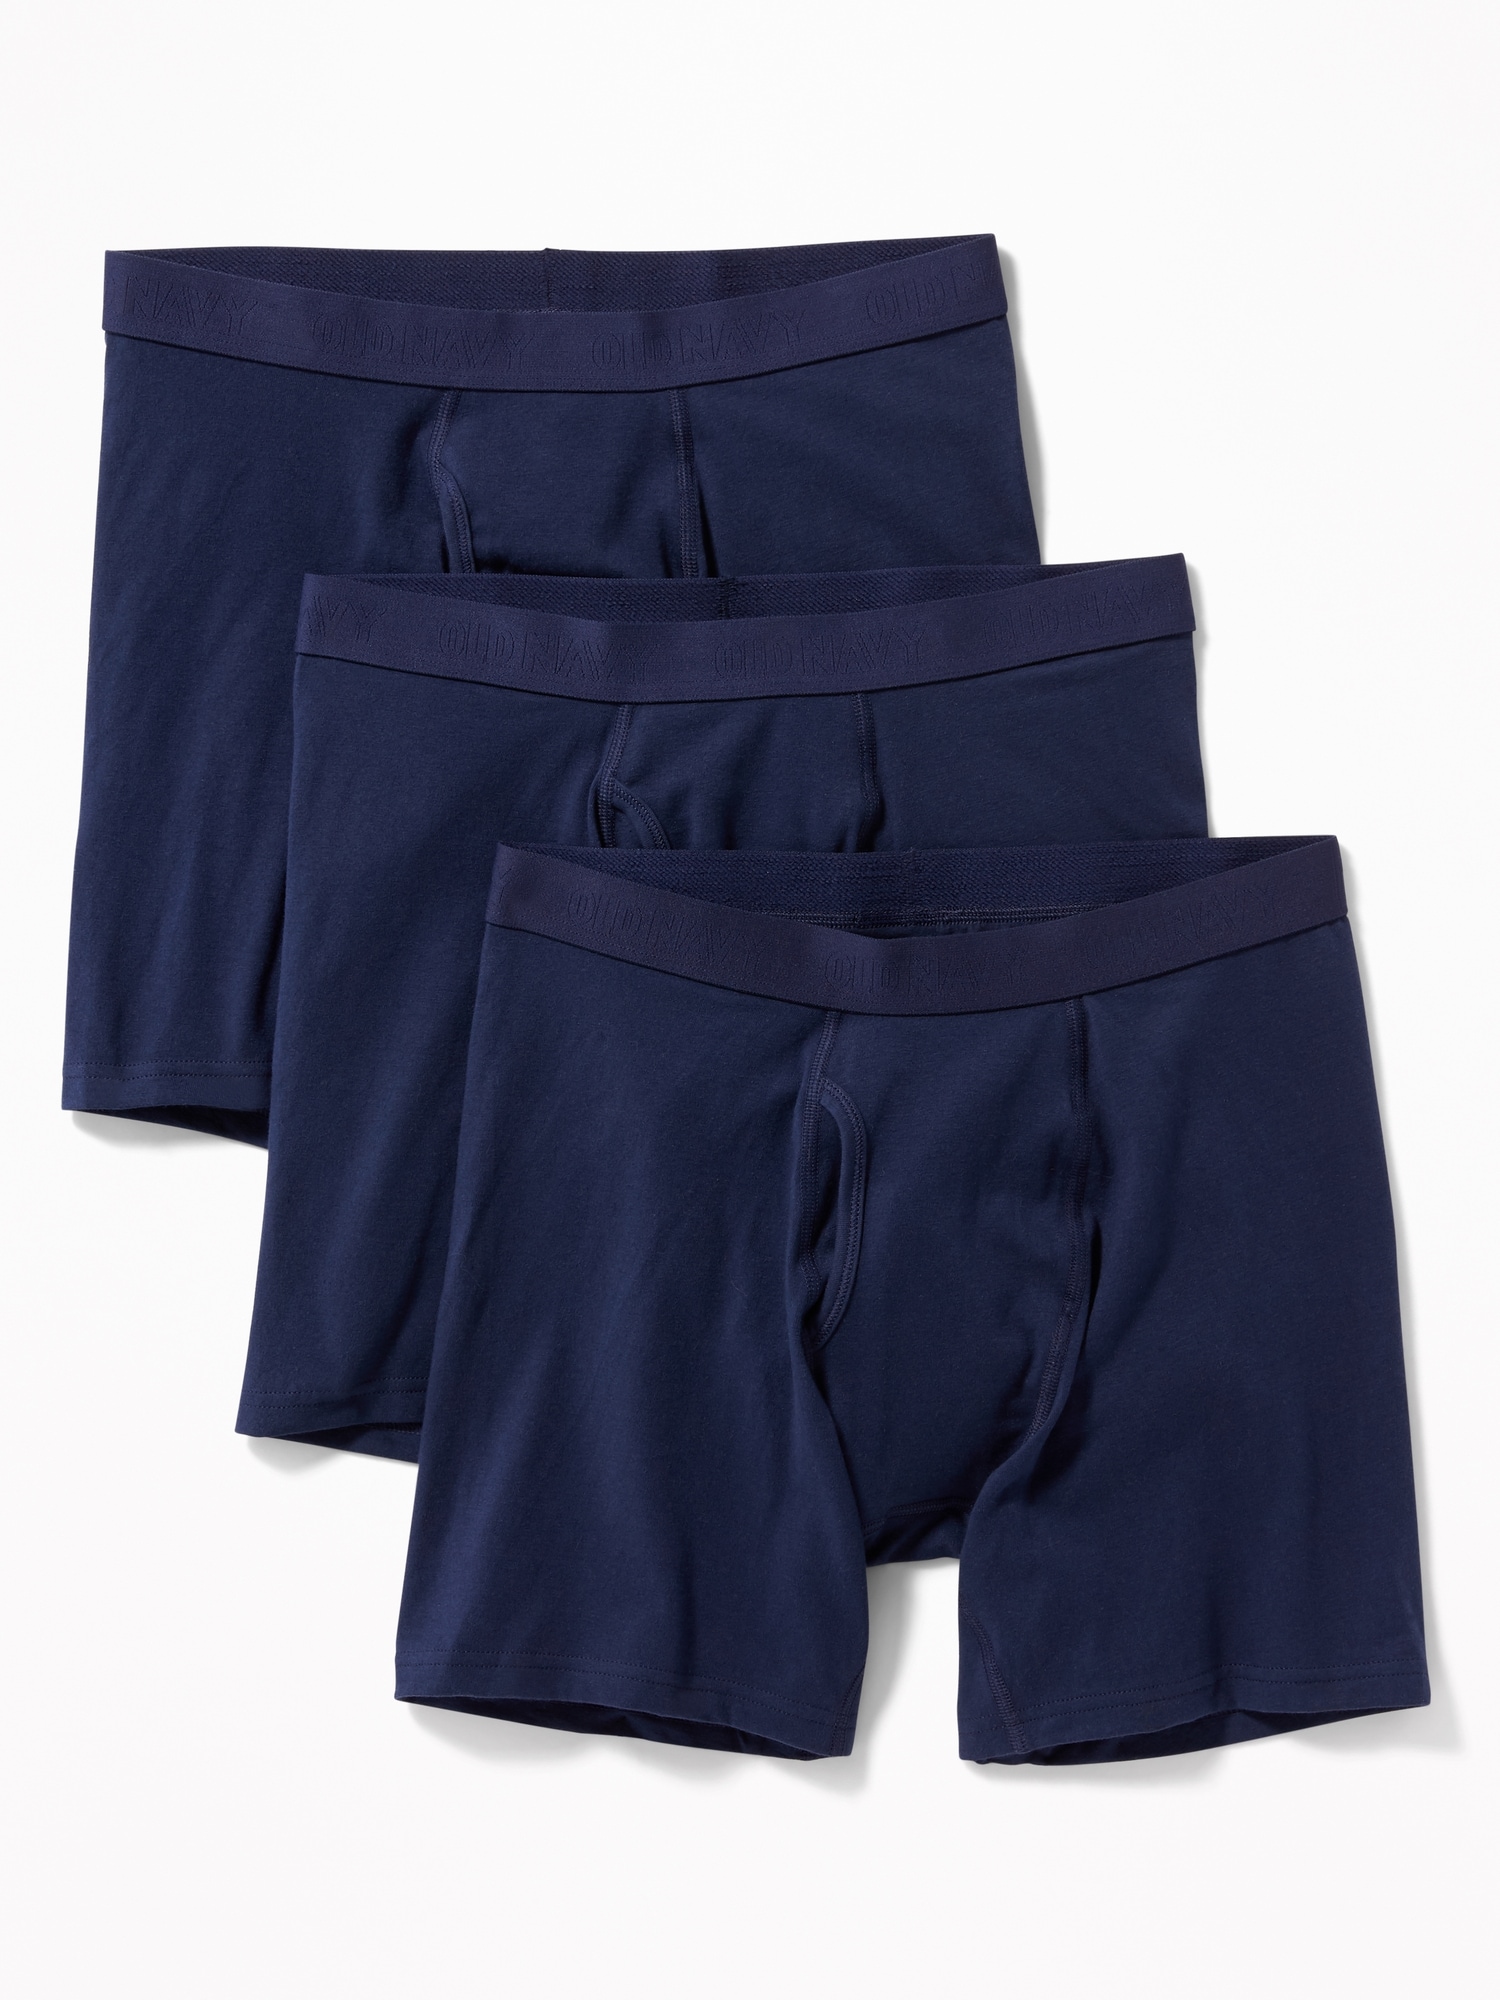 Soft-Washed Built-In Flex Boxer-Brief Underwear 10-Pack for Men